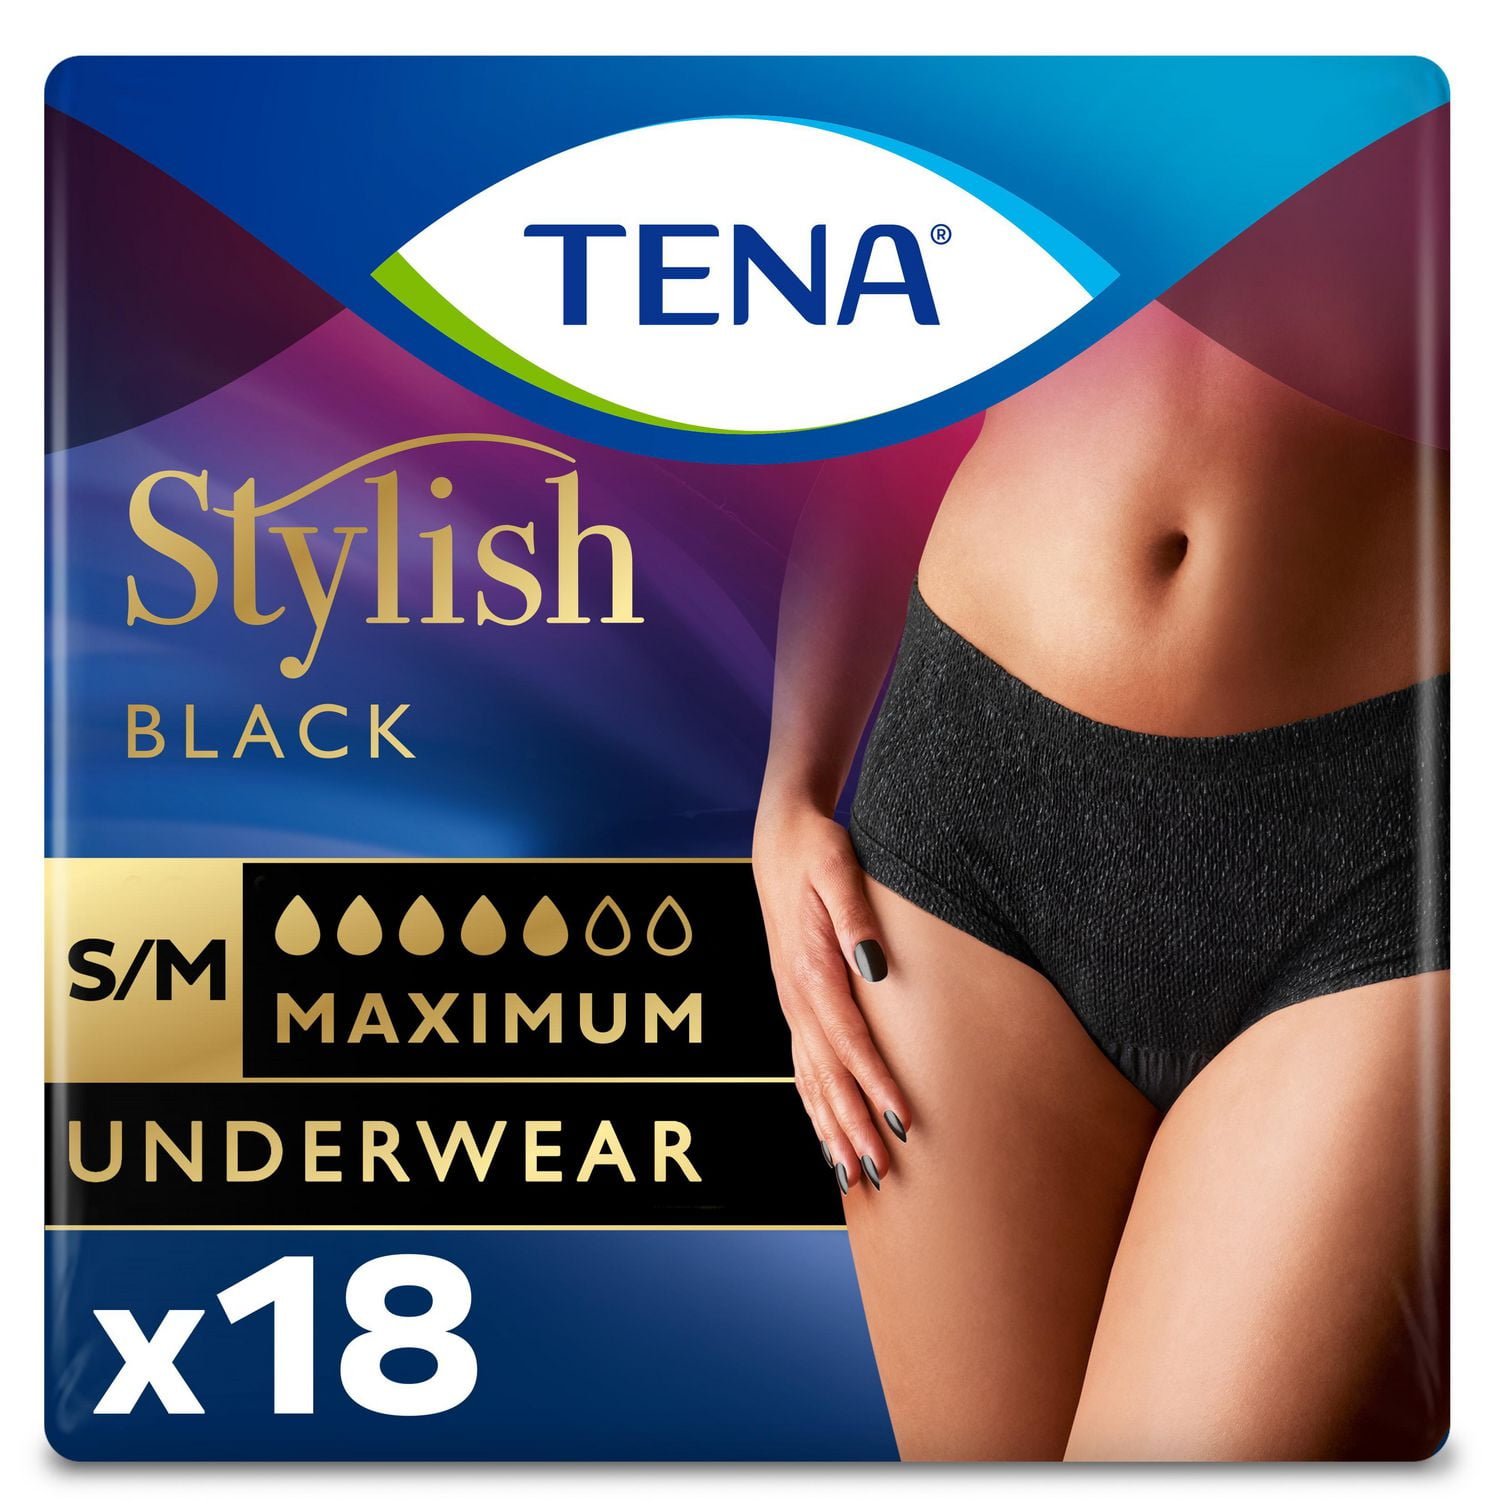 TENA Stylish Black Underwear Maximum Absorbency Small/Medium 18 Count, 18  Count